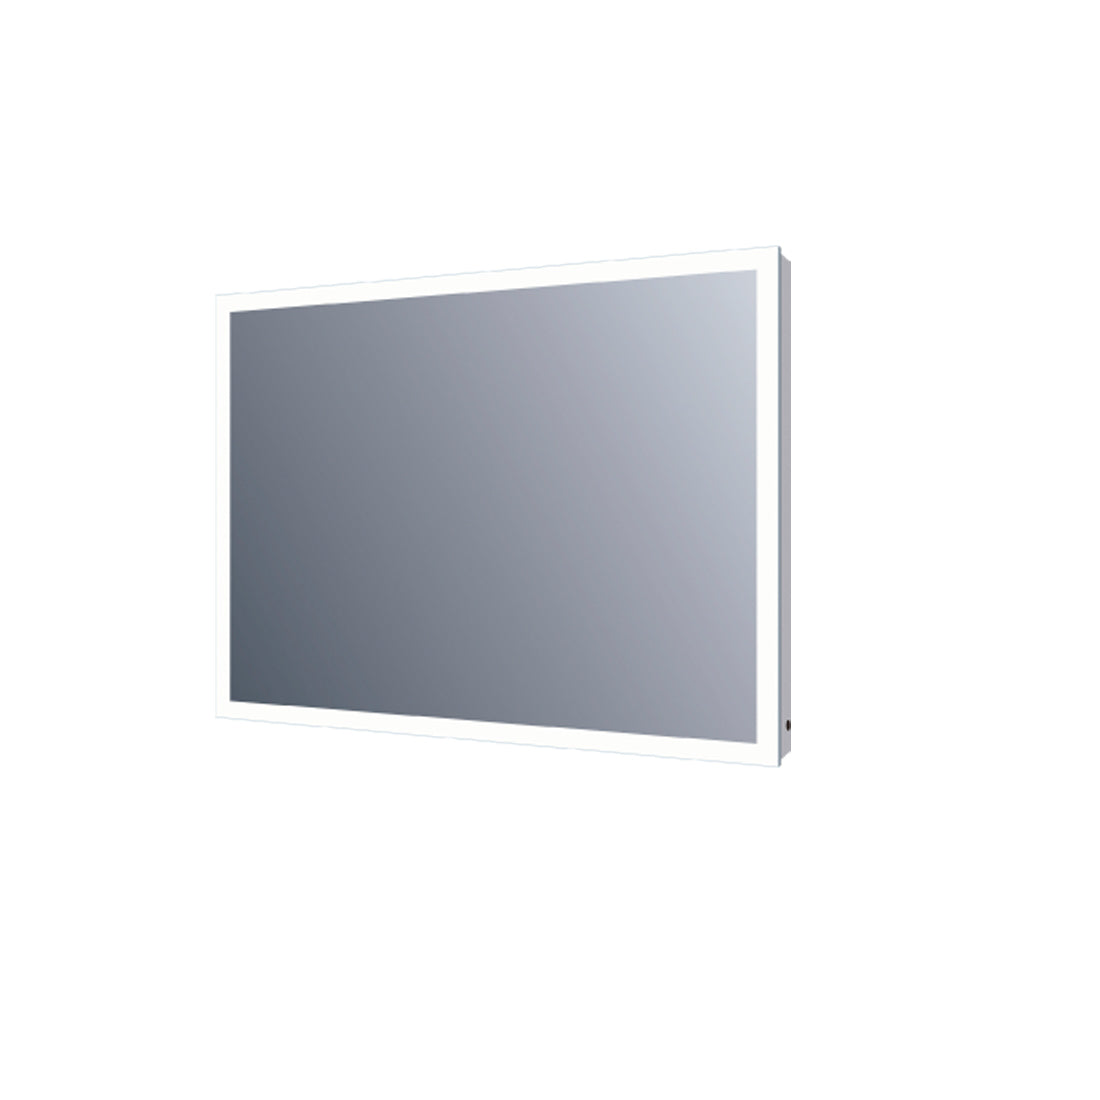 Estructura de aluminio mate tipo espejo de 32". Sensor de movimiento IR. 32" x 24" (DAX-DL03D-M8060)